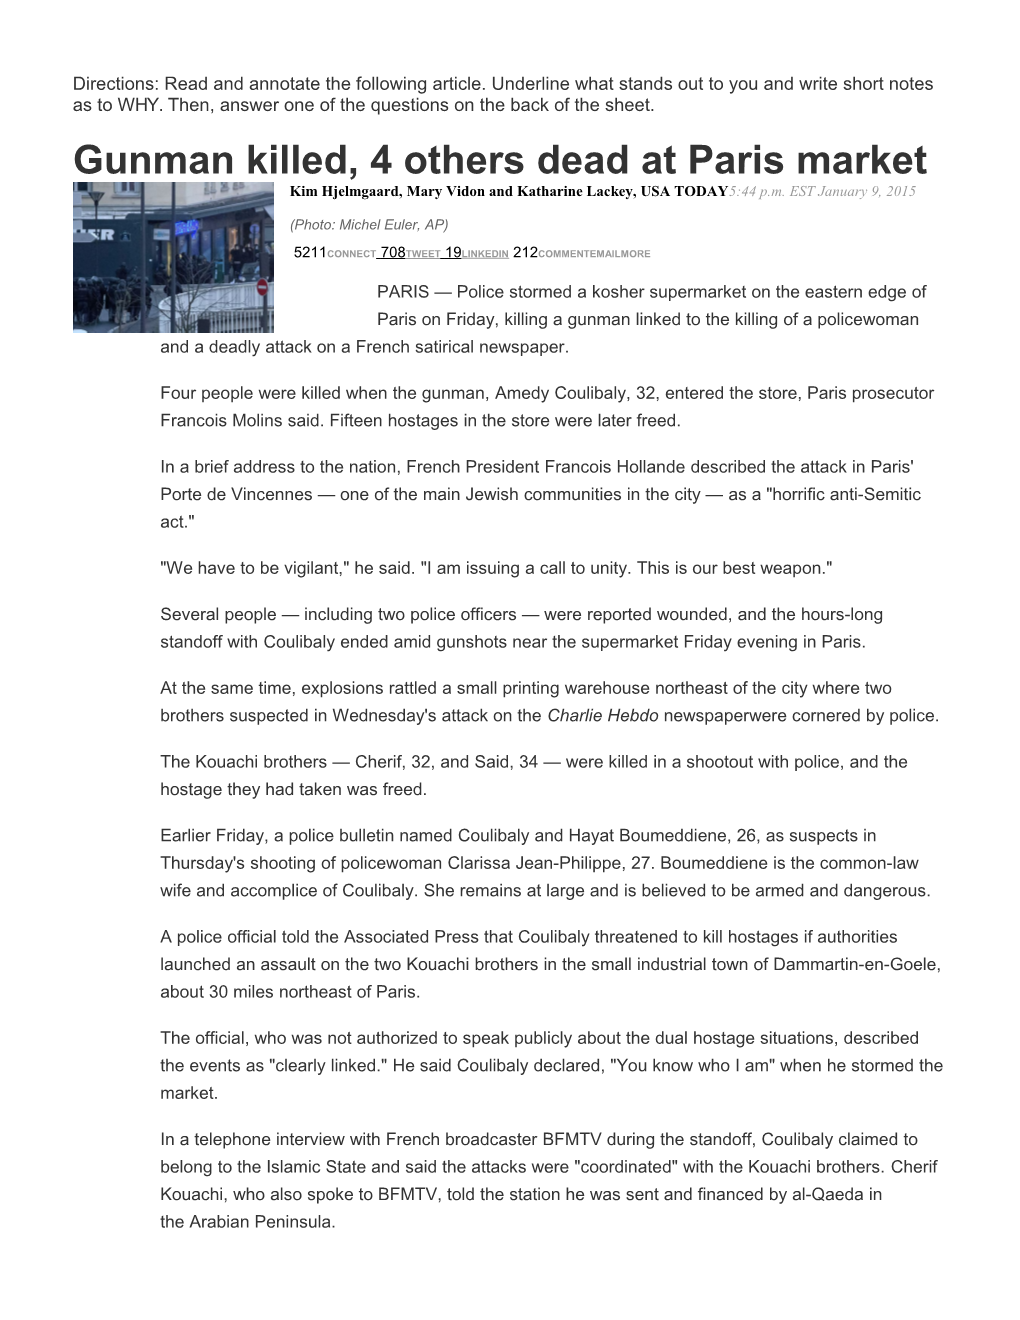 Gunman Killed, 4 Others Dead at Paris Market